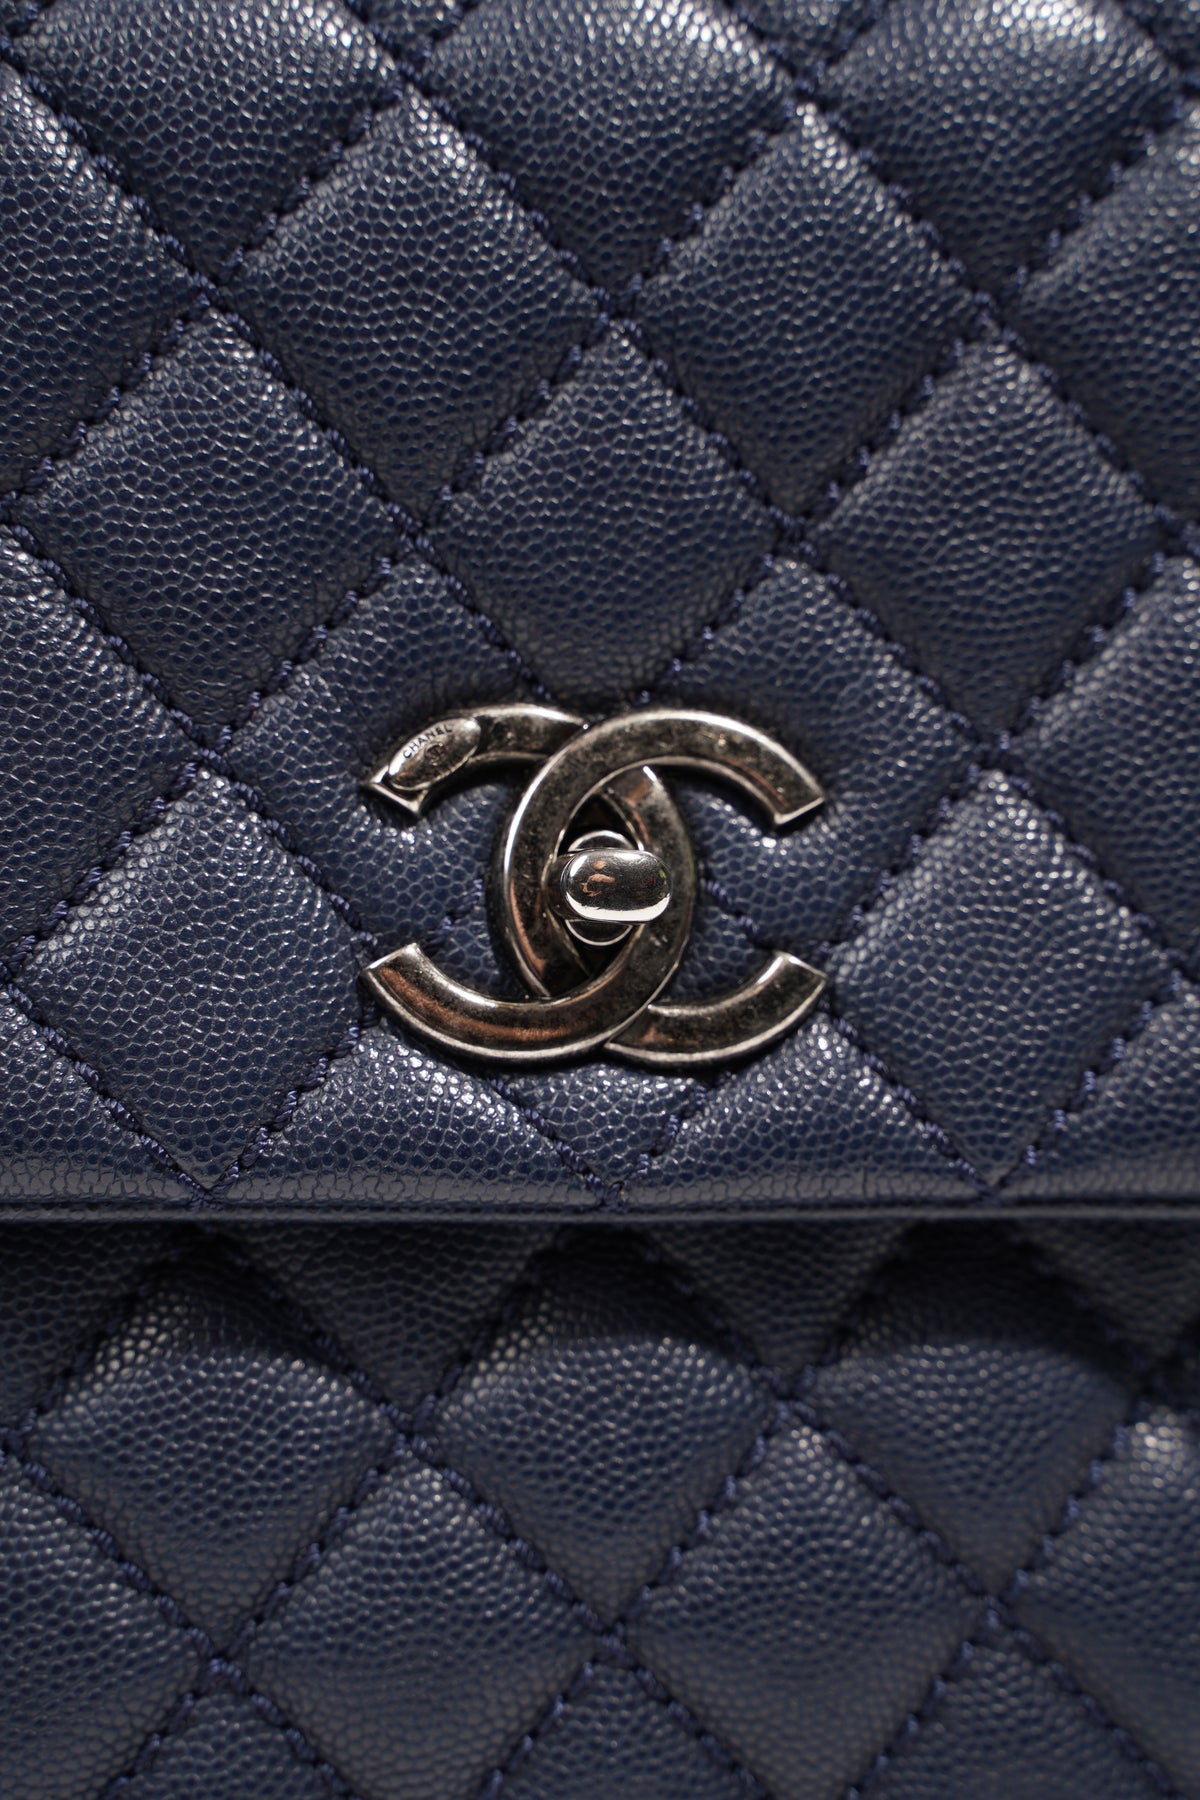 Chanel Bag Coco Luxe Top Handle (Navy blue)